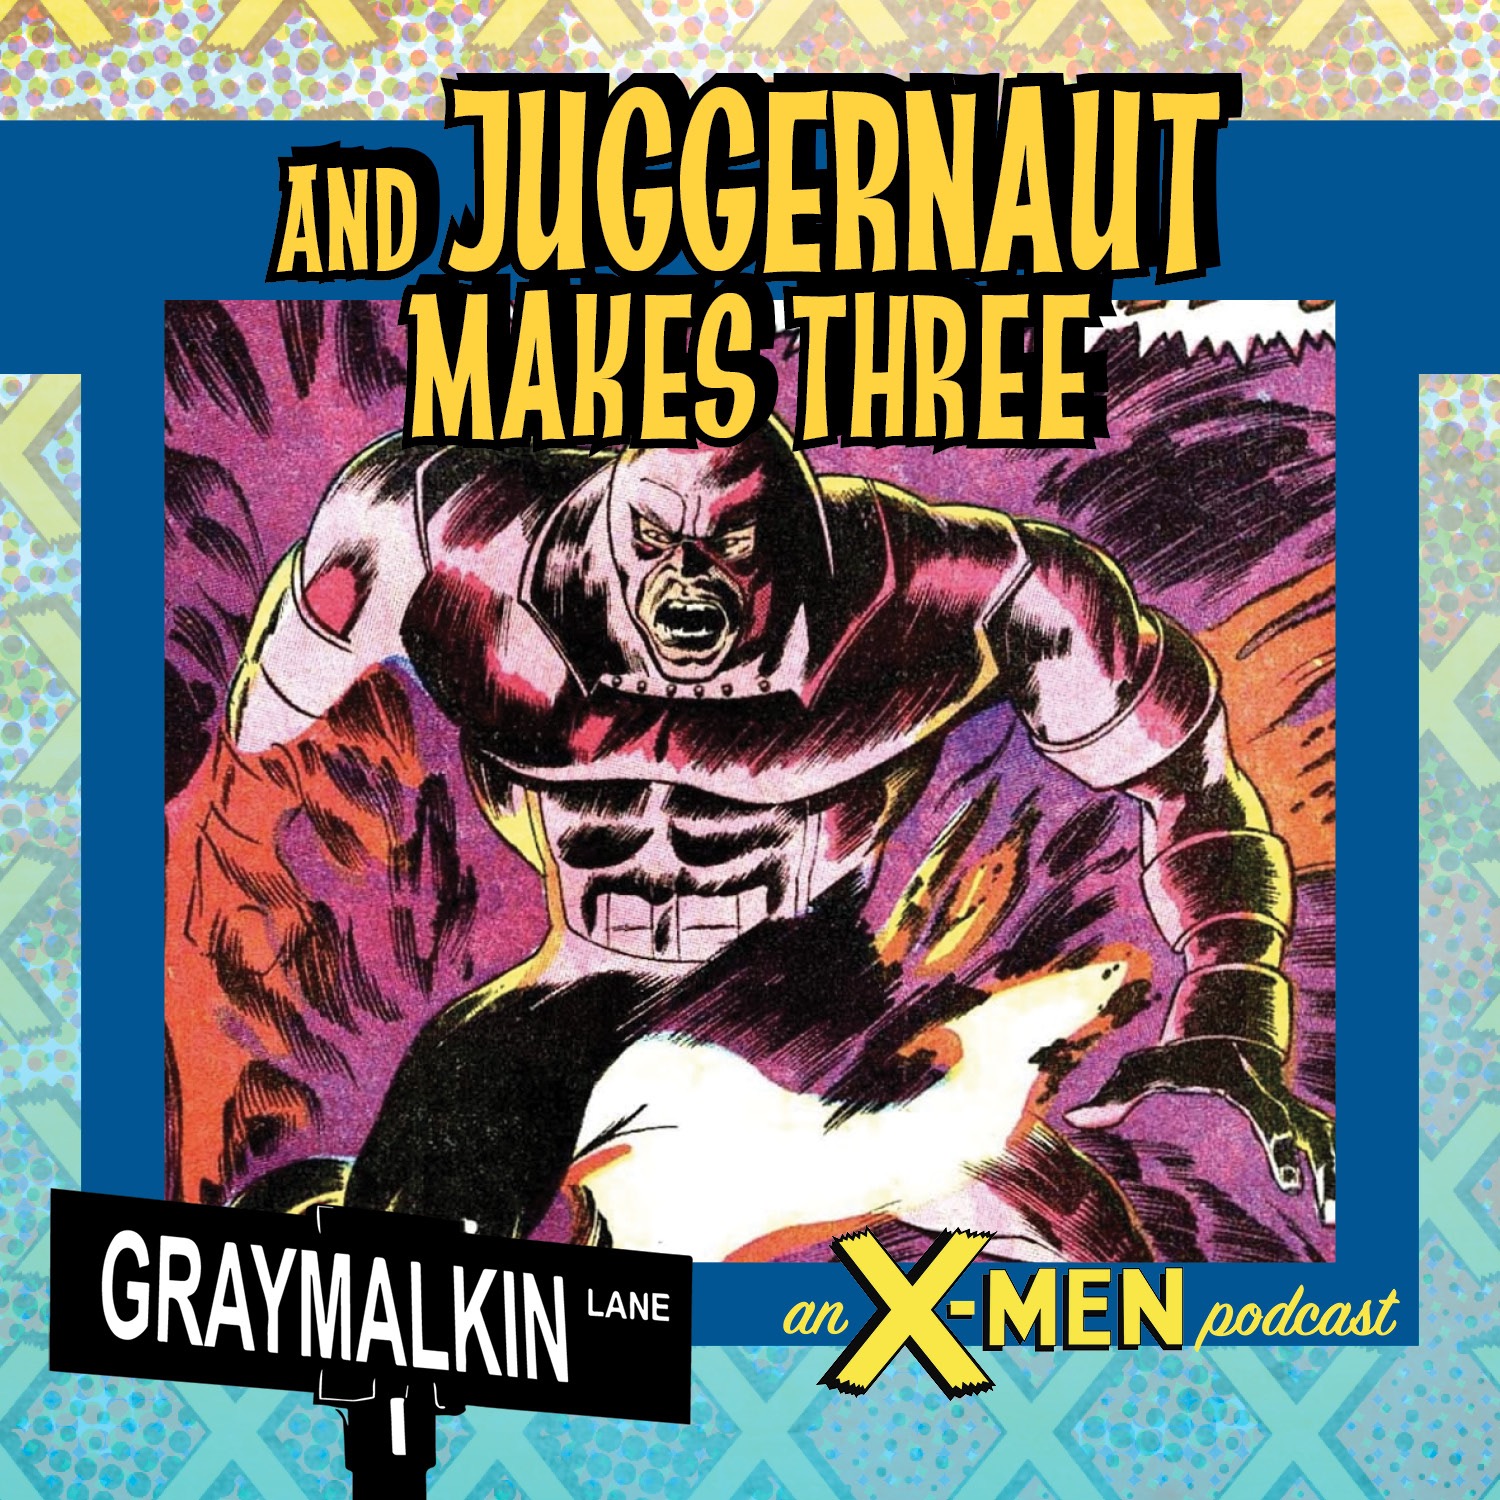 Dr. Strange 182: And Juggernaut Makes Three! Featuring Peter Sanderson and Chris Sotomayor! With Austin Gorton!